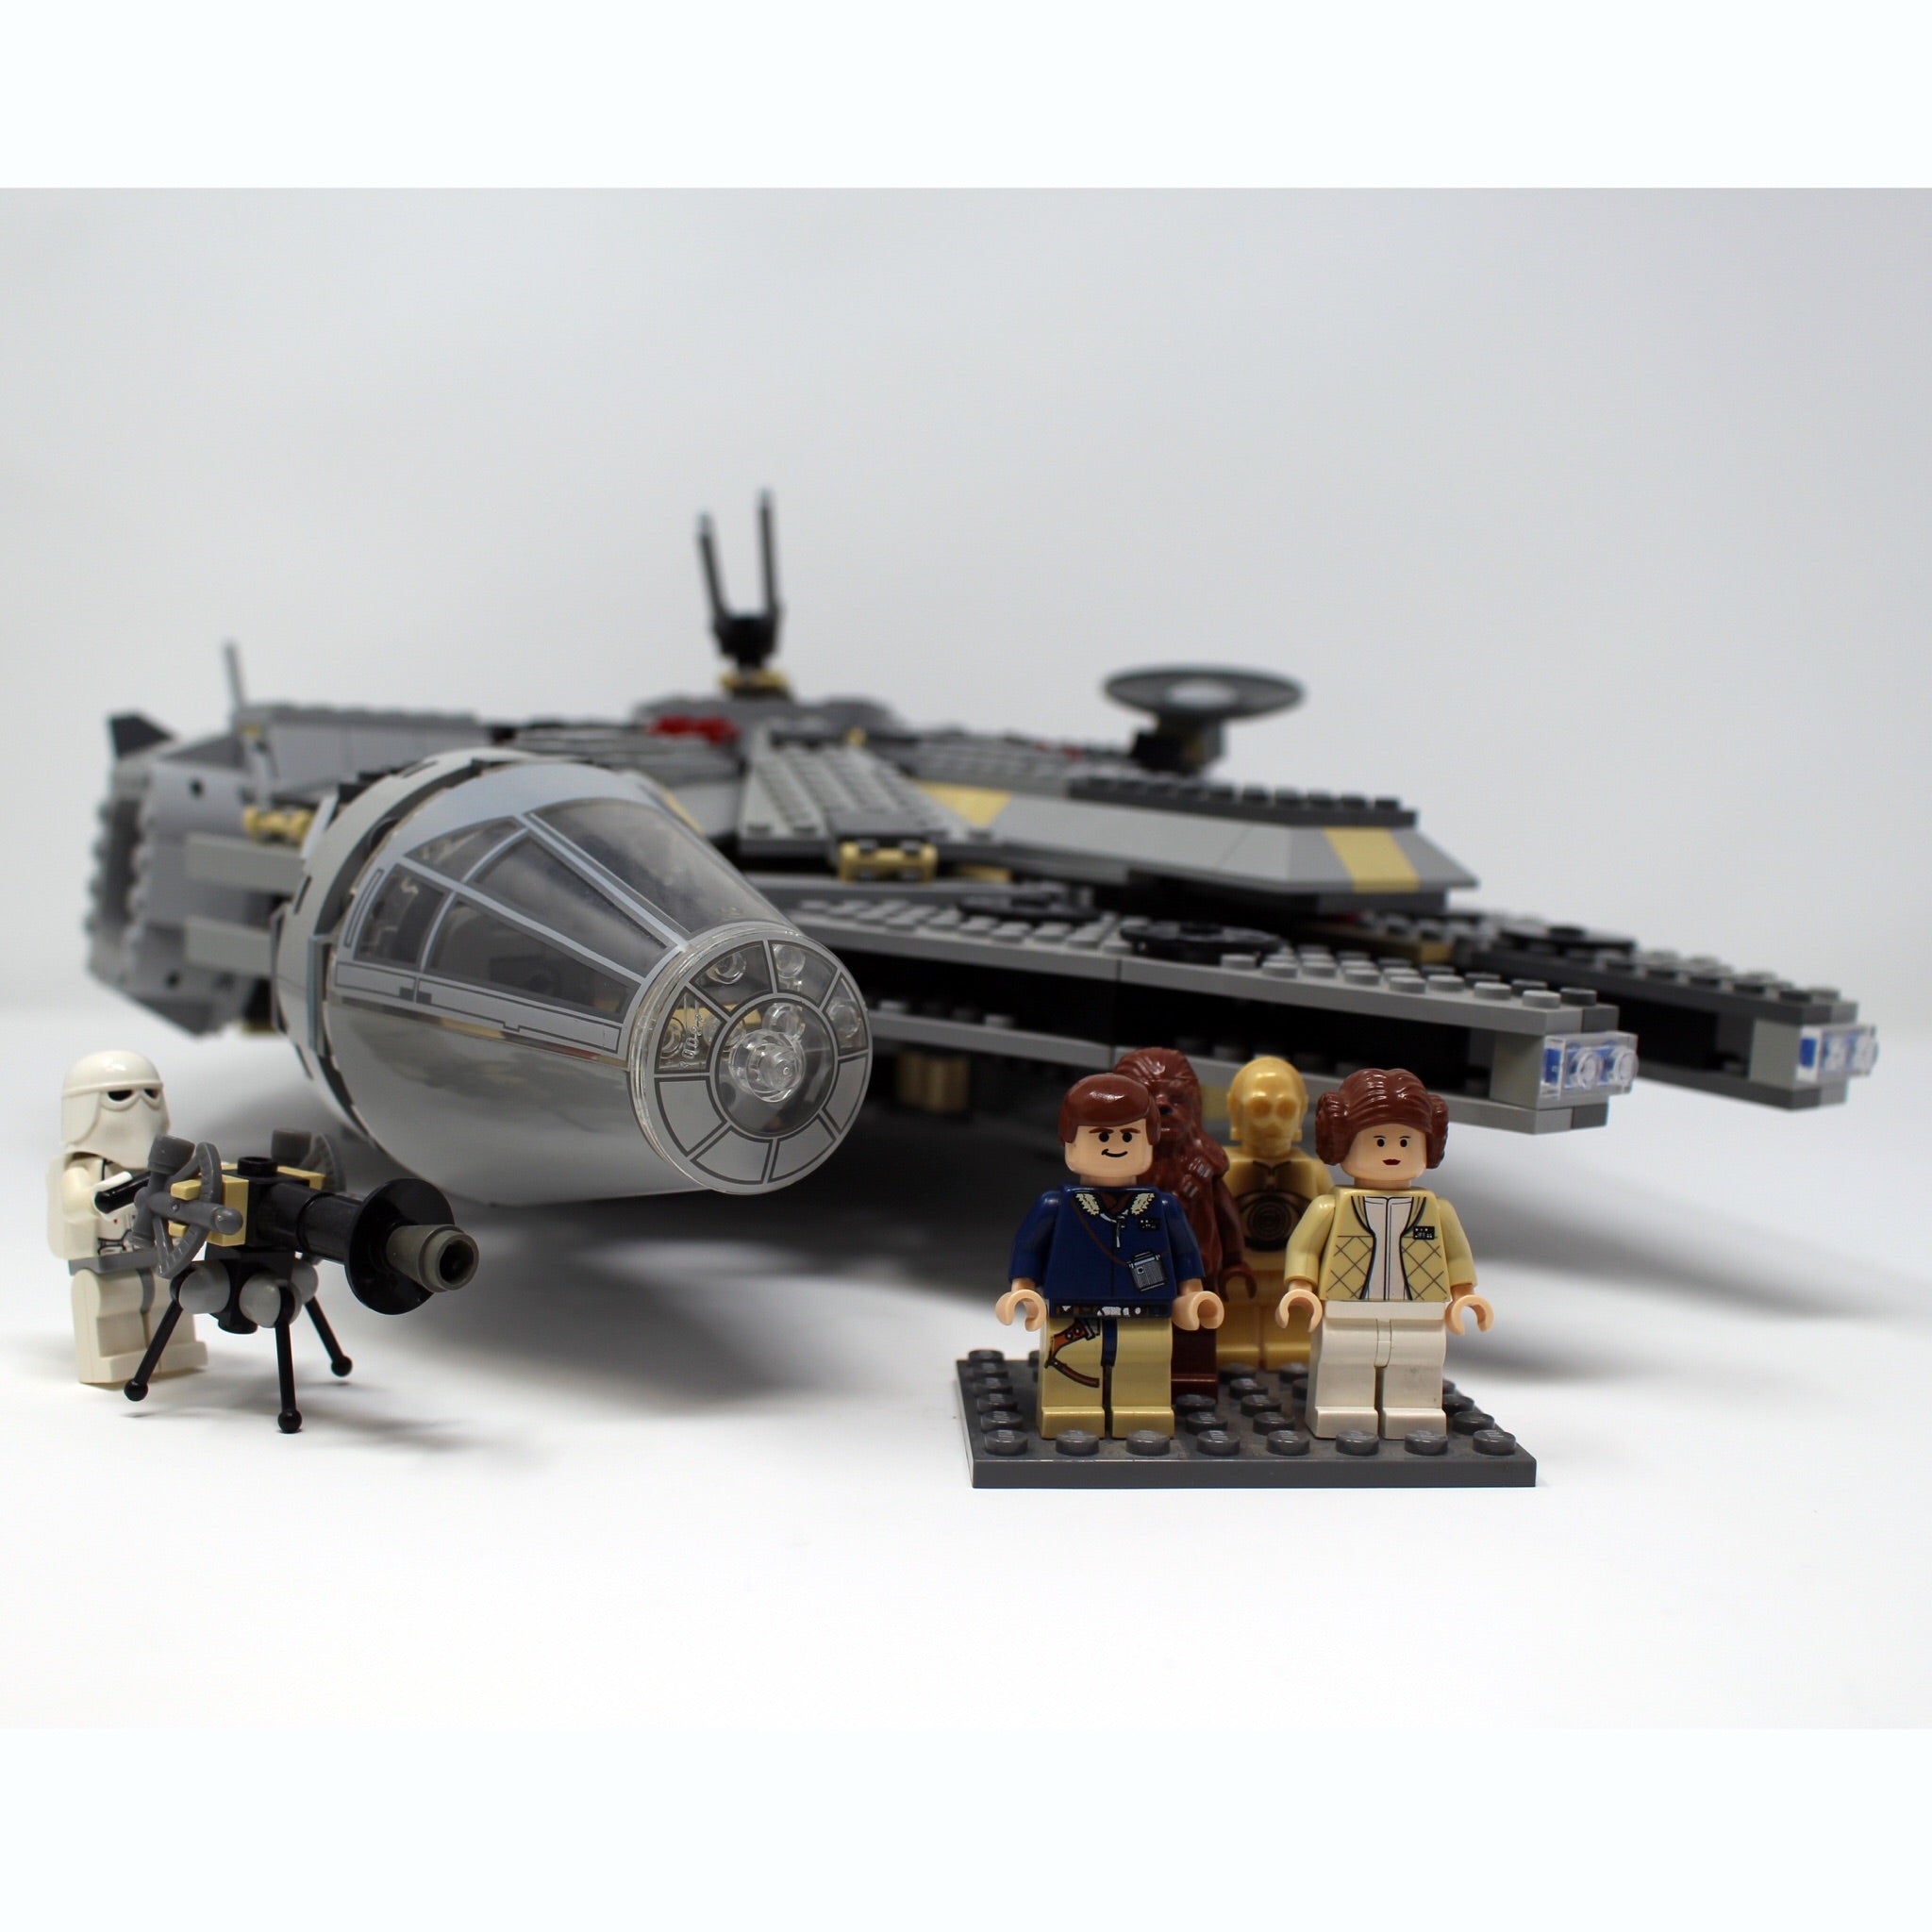 Used Set 4504 Star Wars Millennium Falcon (2004)